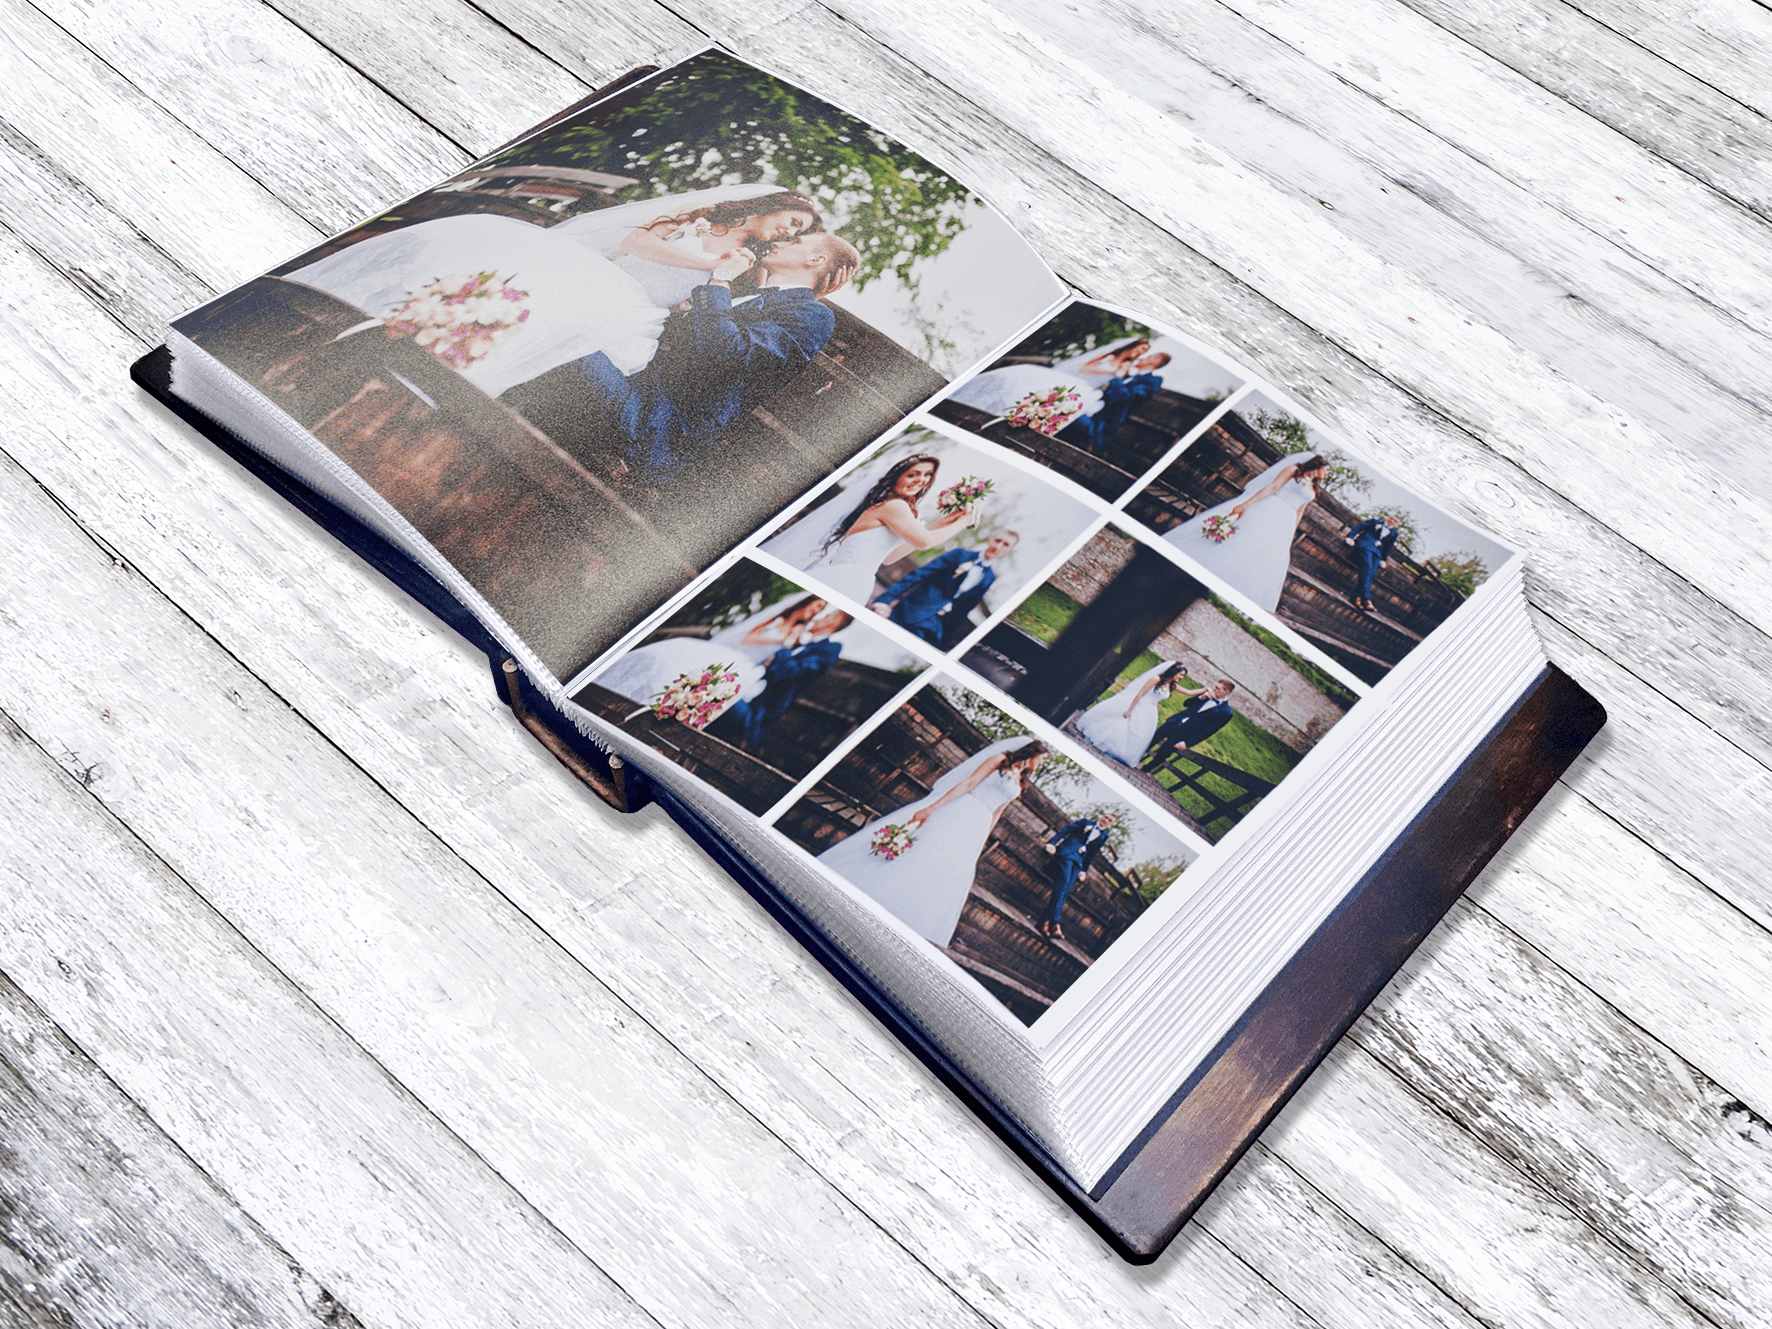 Small Photo Album 4x6 Holds 20 Ideal for Photobook or Theme-Photos(Black)